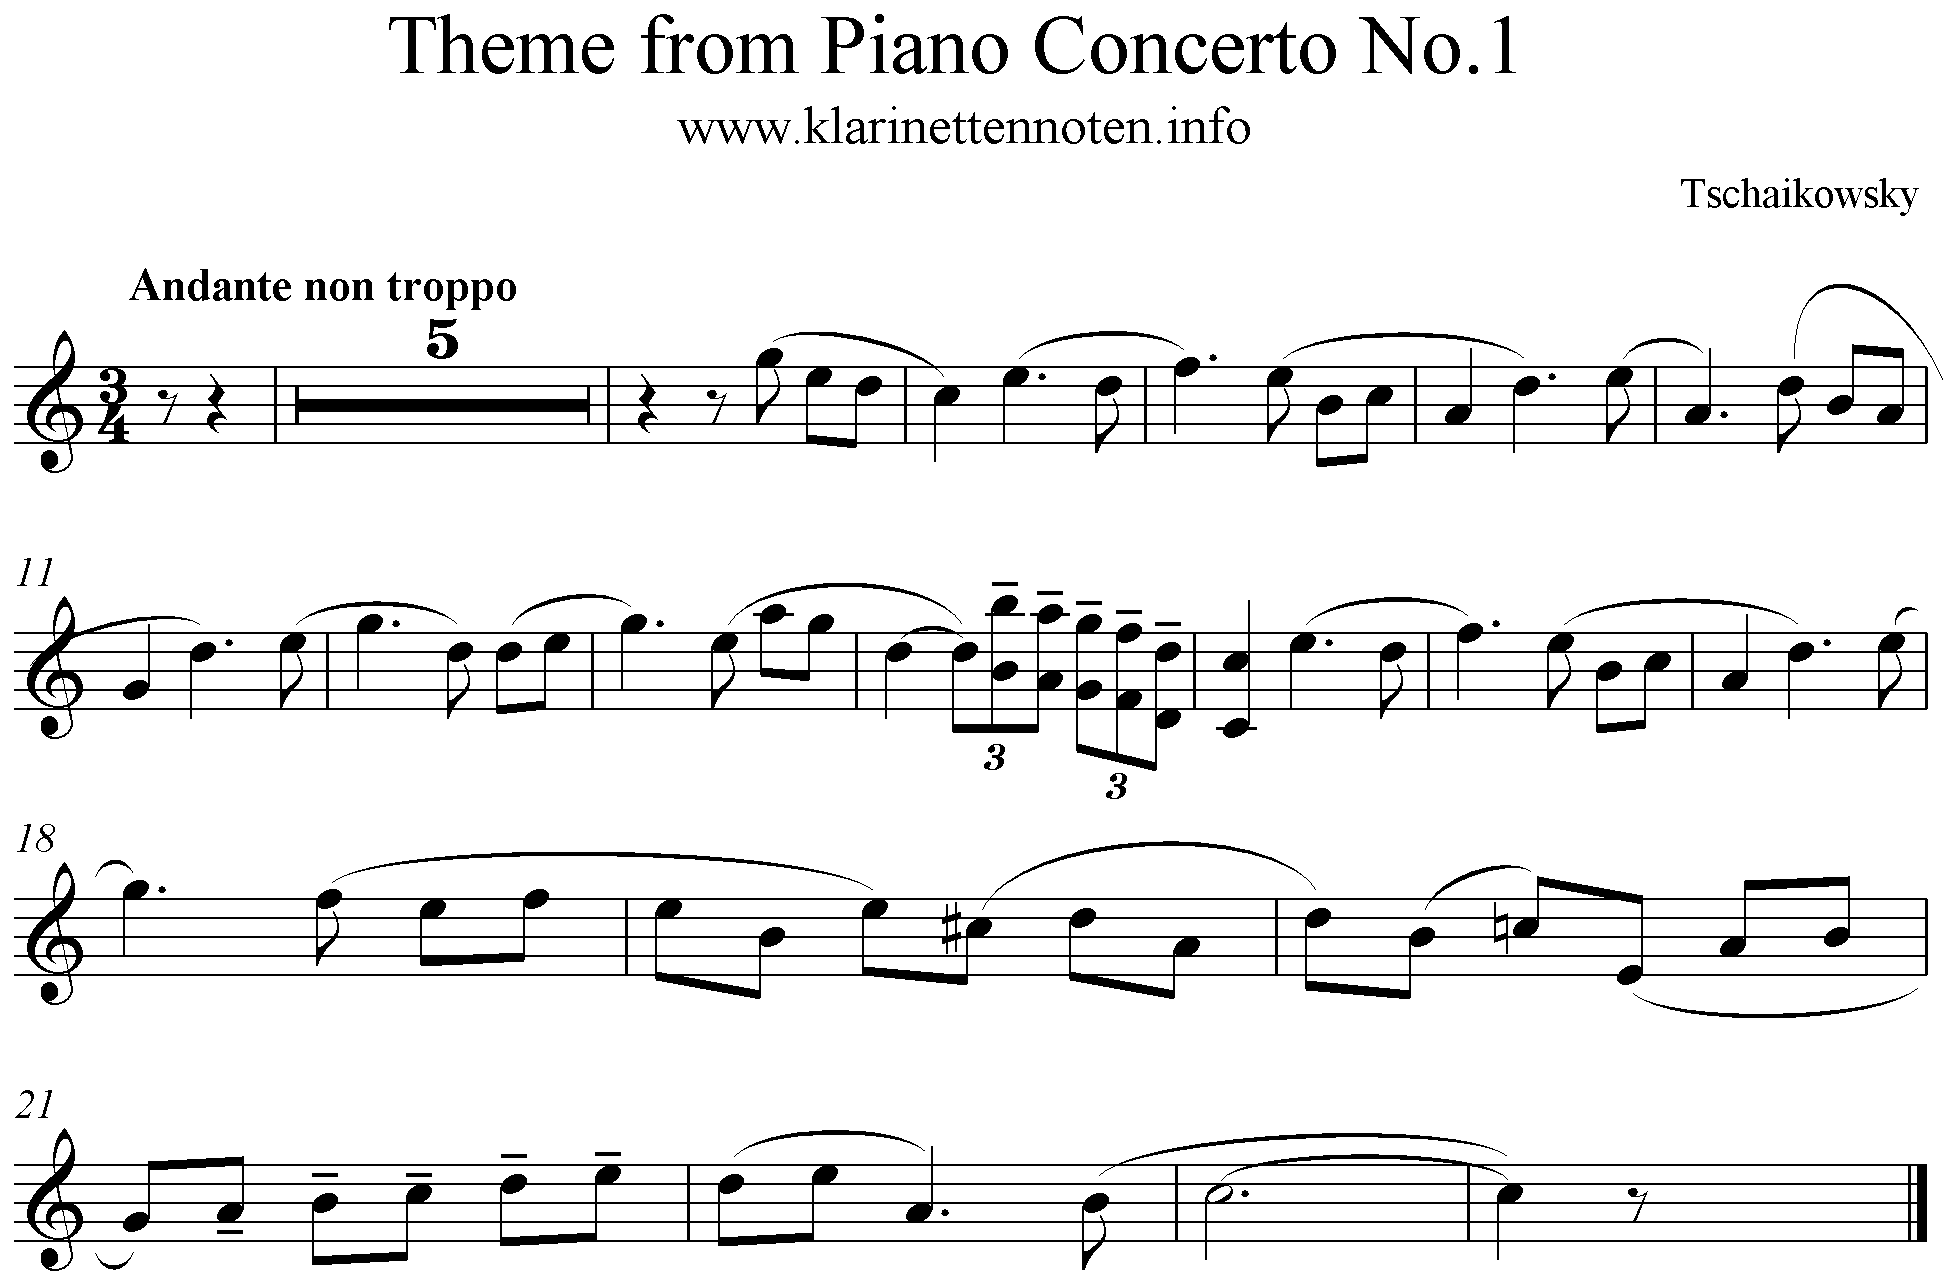 Theme from Piano Concerto No. 1 Tschaikowsky